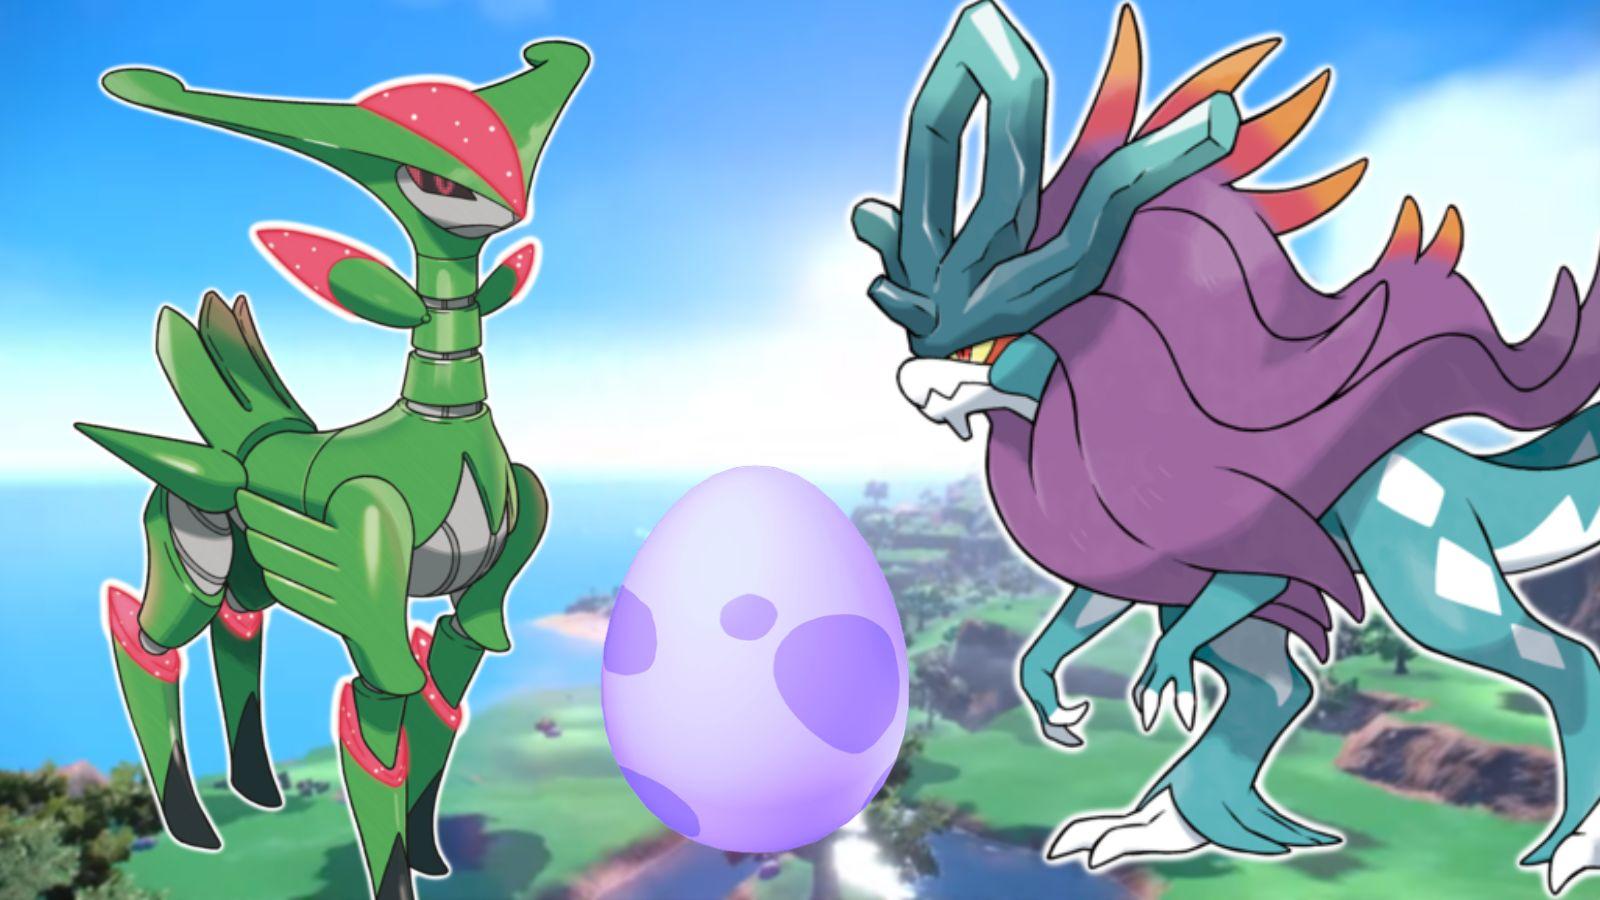 Pokémon Scarlet & Violet: How to get a guaranteed Shiny Paradox